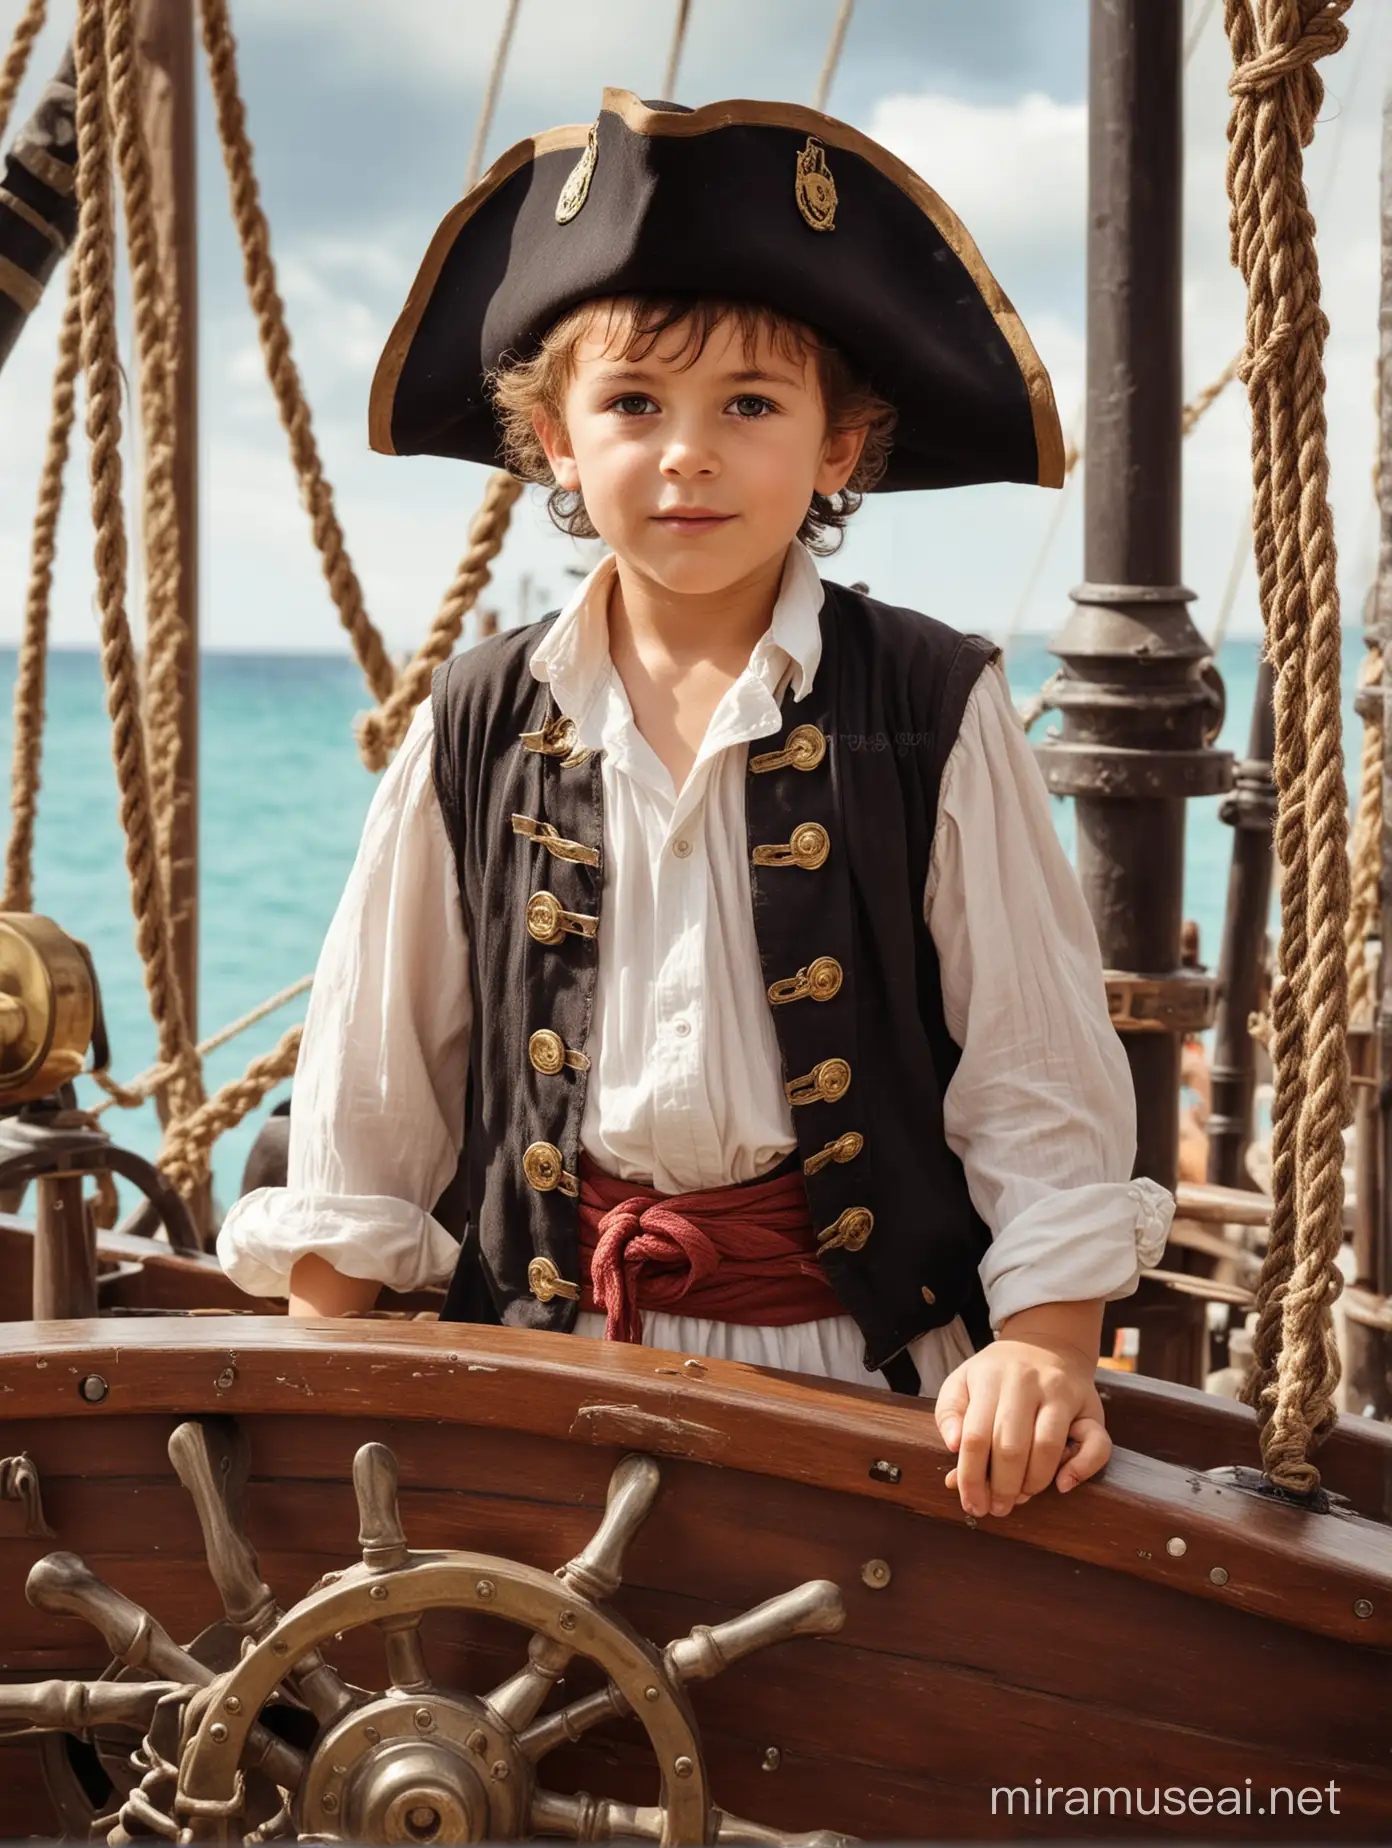 Adventurous Little Boy as a Caribbean Pirate on a Ship